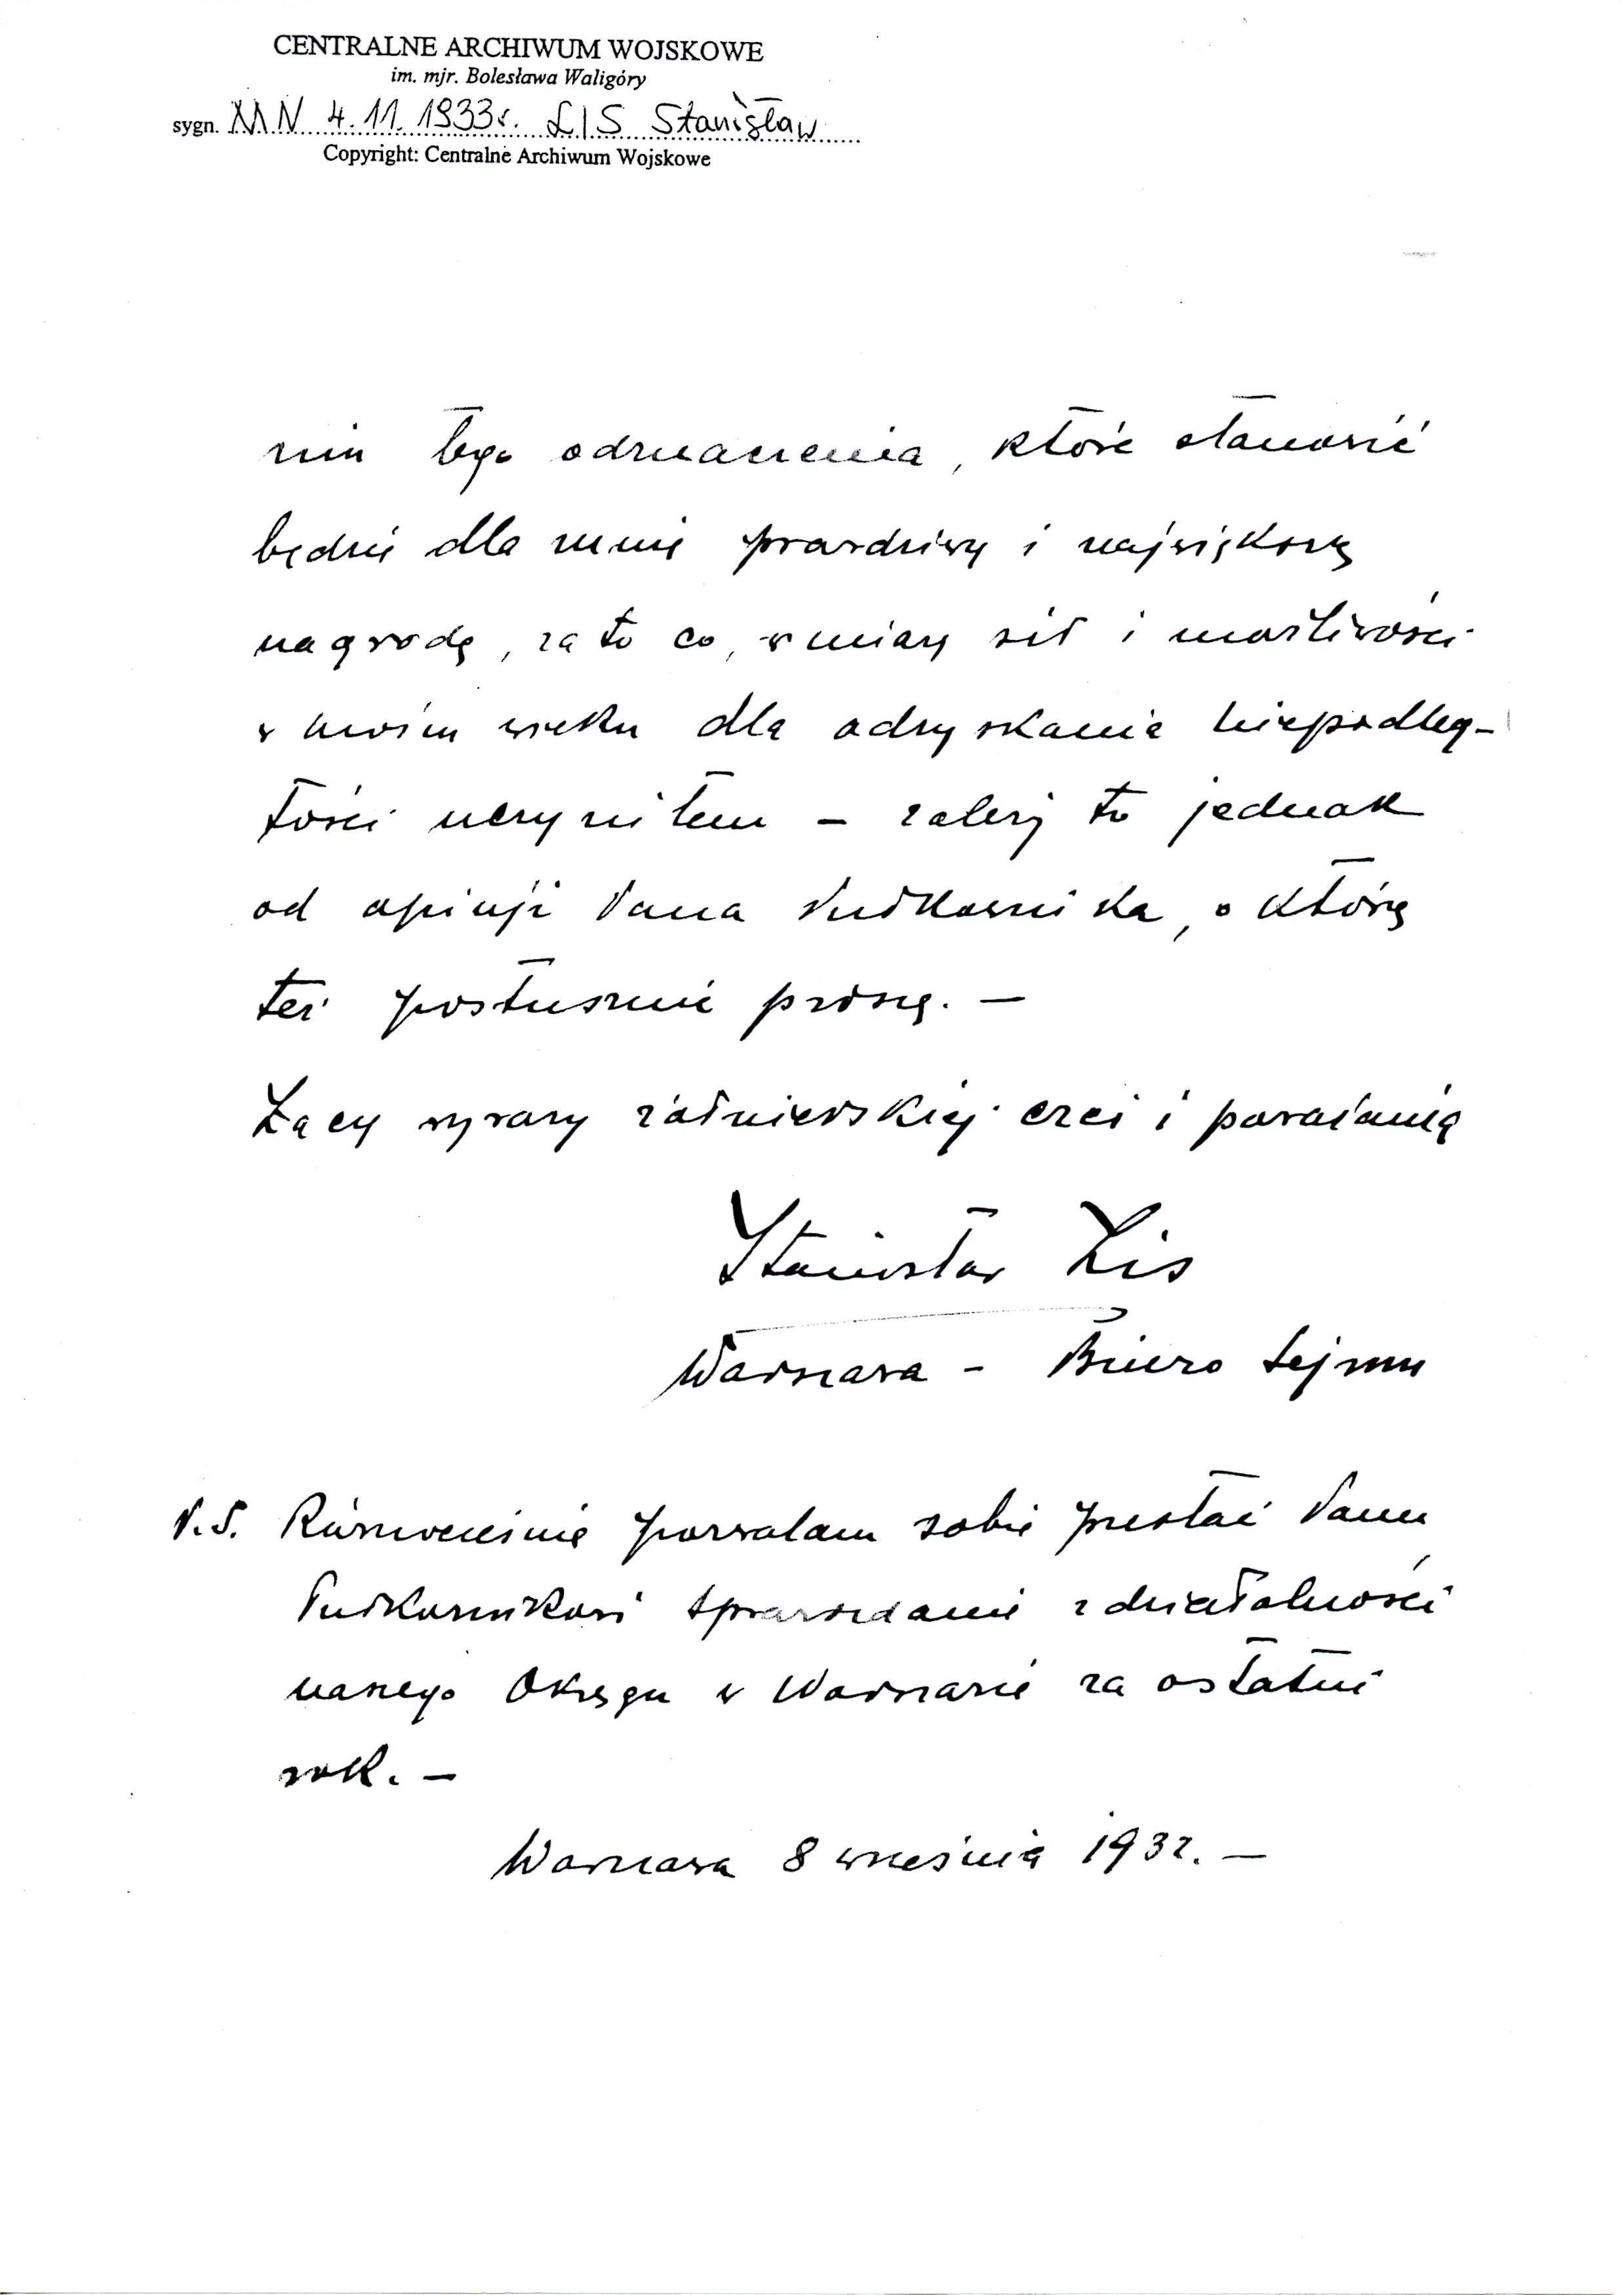 Stanislaw Lis Handwritten Letter page 3 1937.jpg